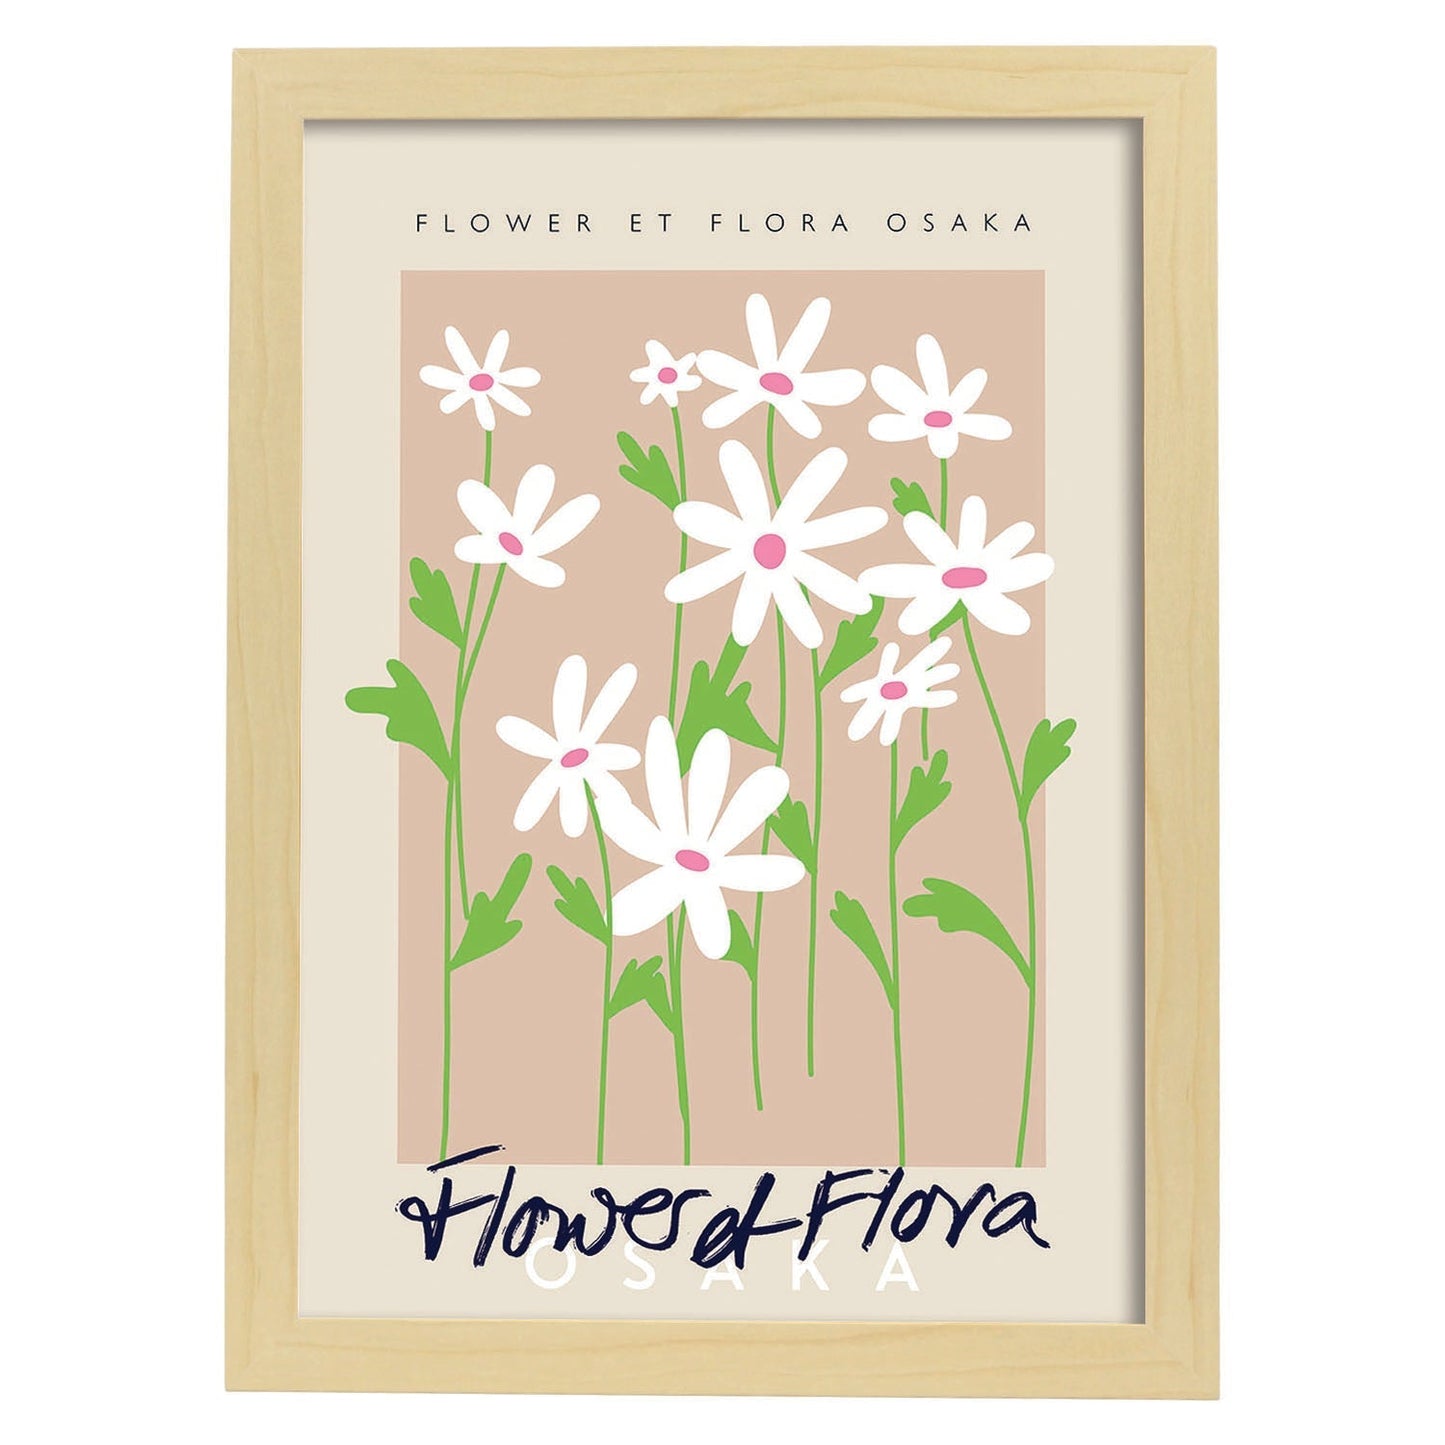 Lamina artistica decorativa con ilustración de Flower et flora osaka-Artwork-Nacnic-A4-Marco Madera clara-Nacnic Estudio SL